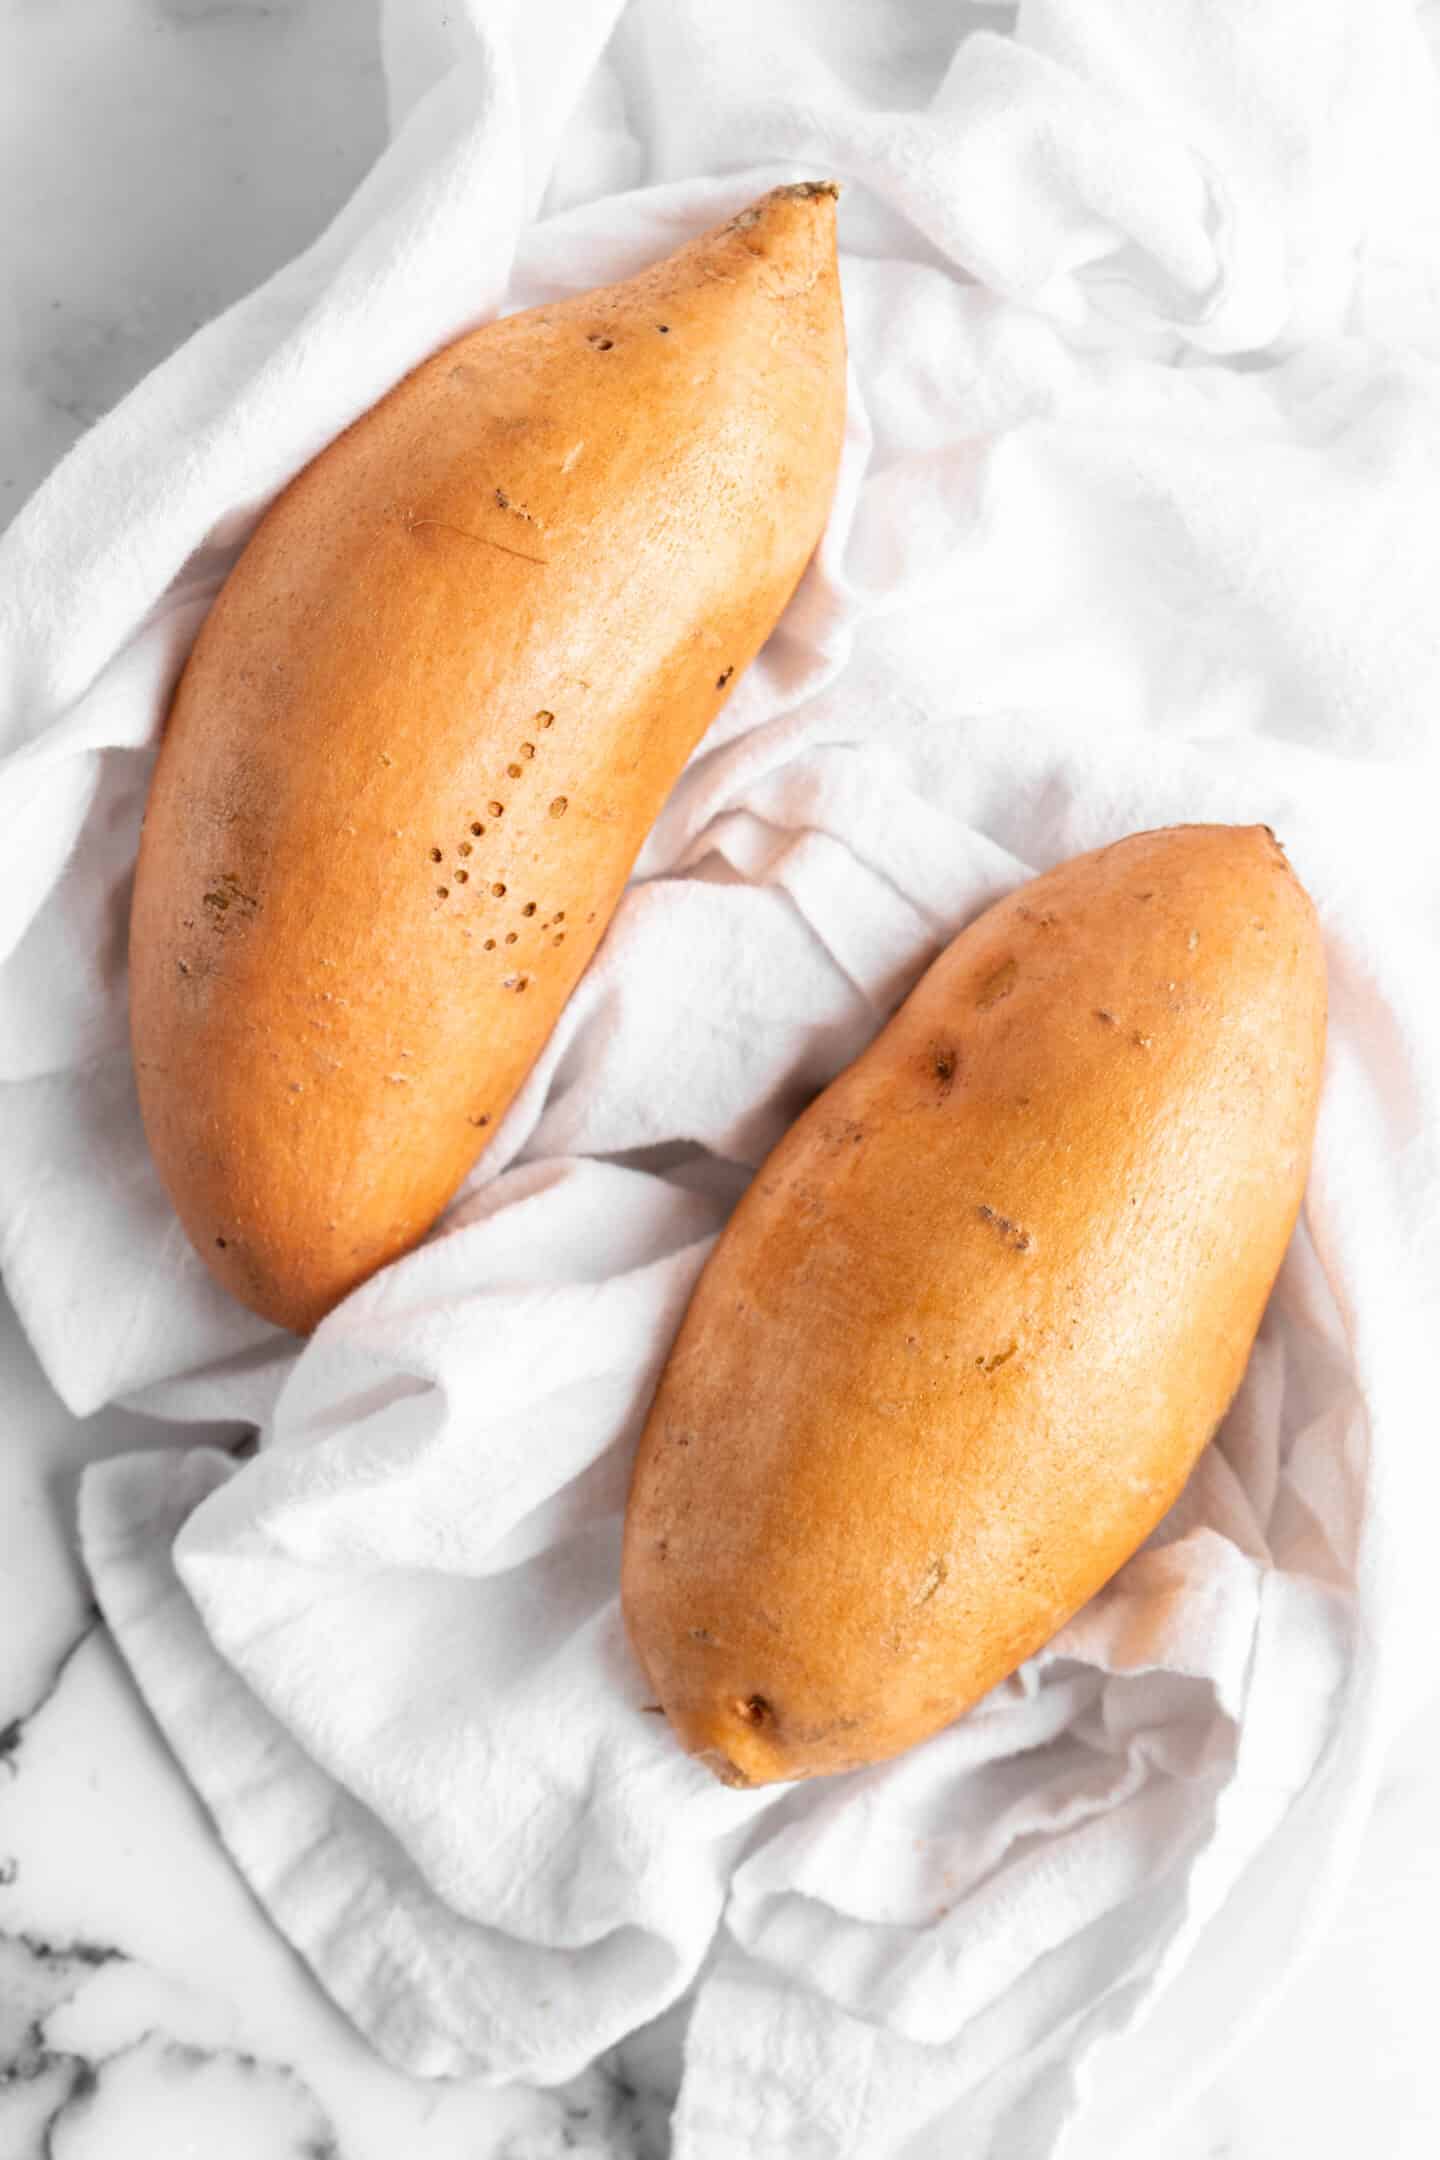 Two sweet potatoes on kitchen towel